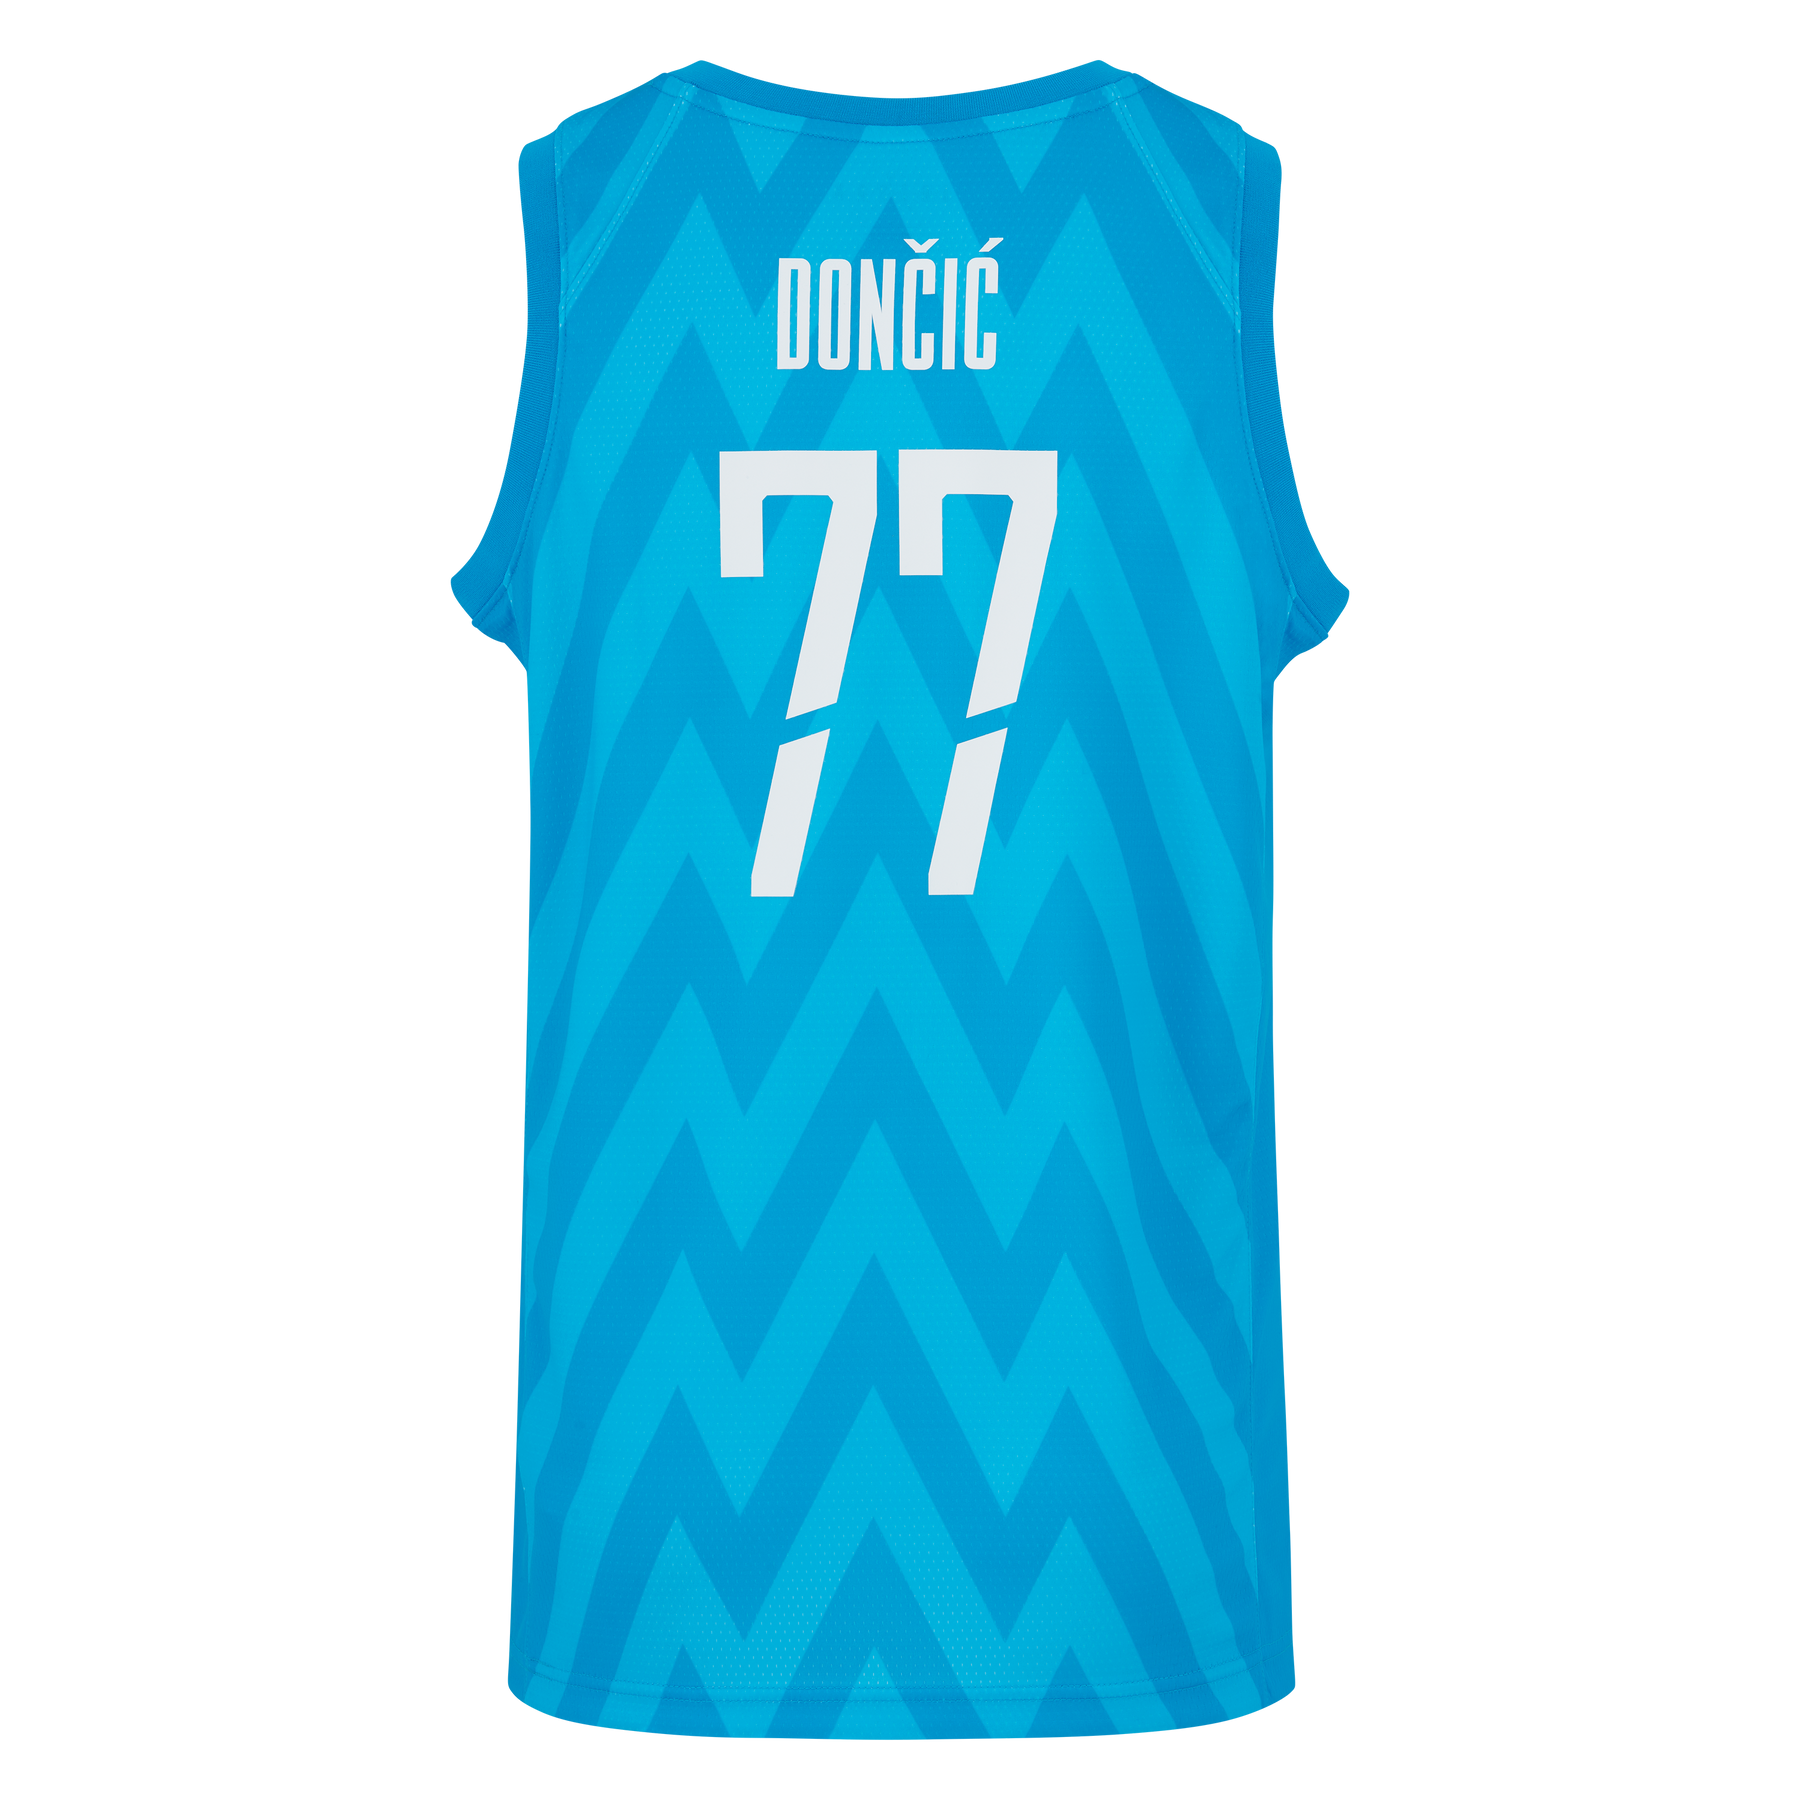 Luka Doncic Dallas Mavericks Basketball Jerseys (Fans Wear